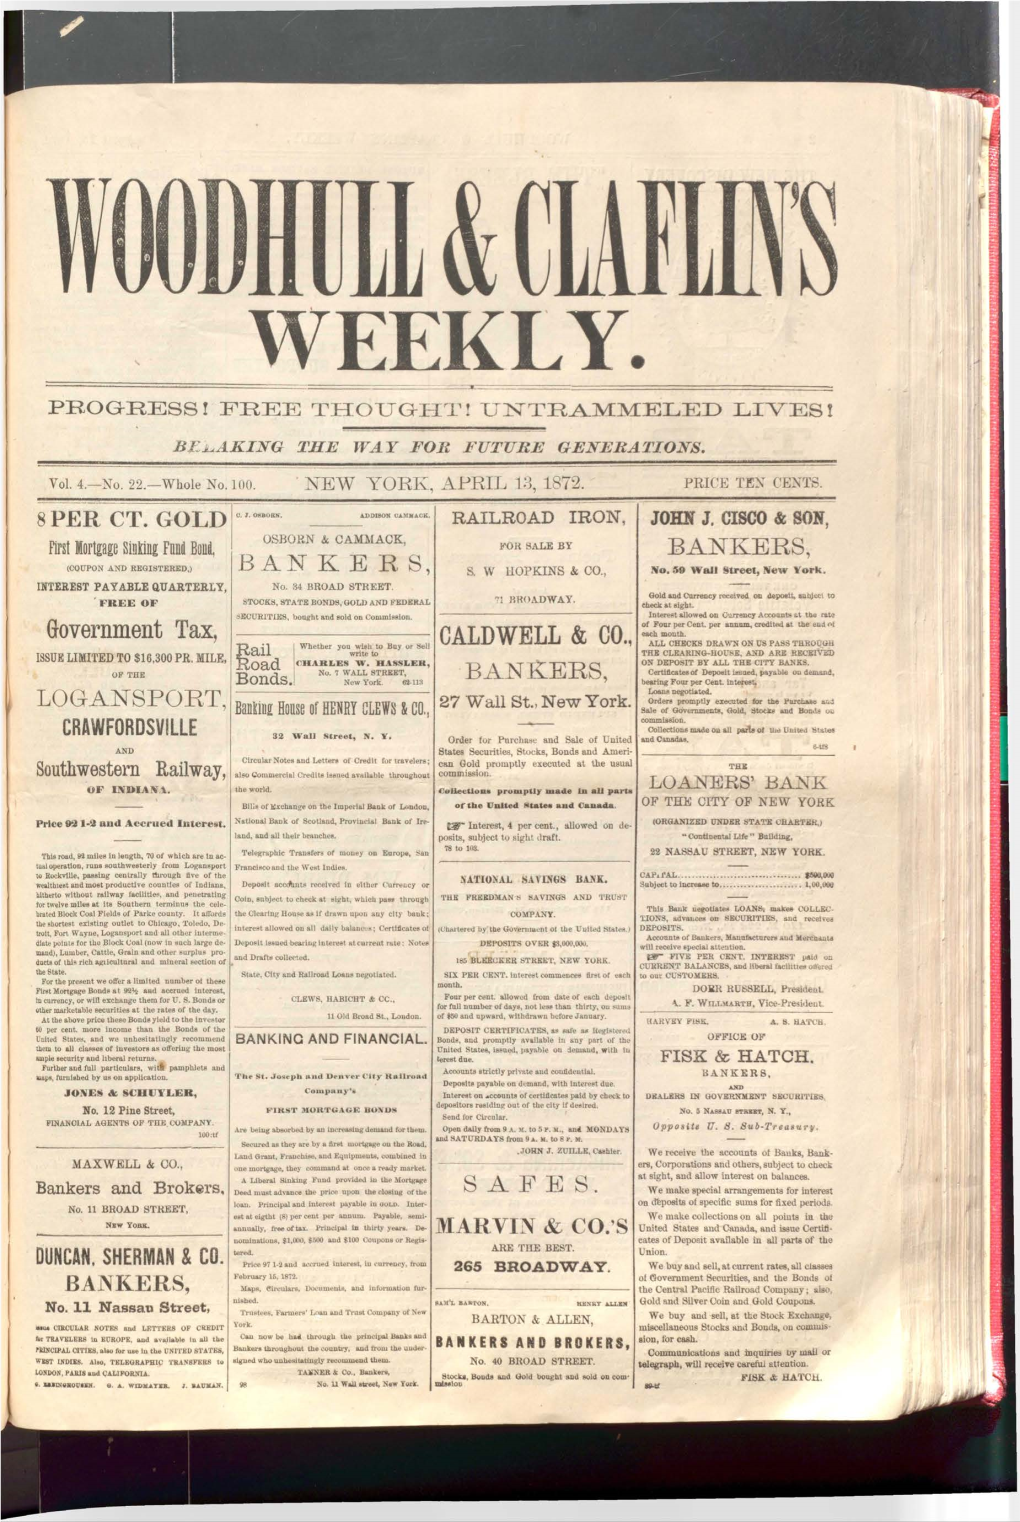 Woodhull and Claflins Weekly V4 N22 Apr 13 1872